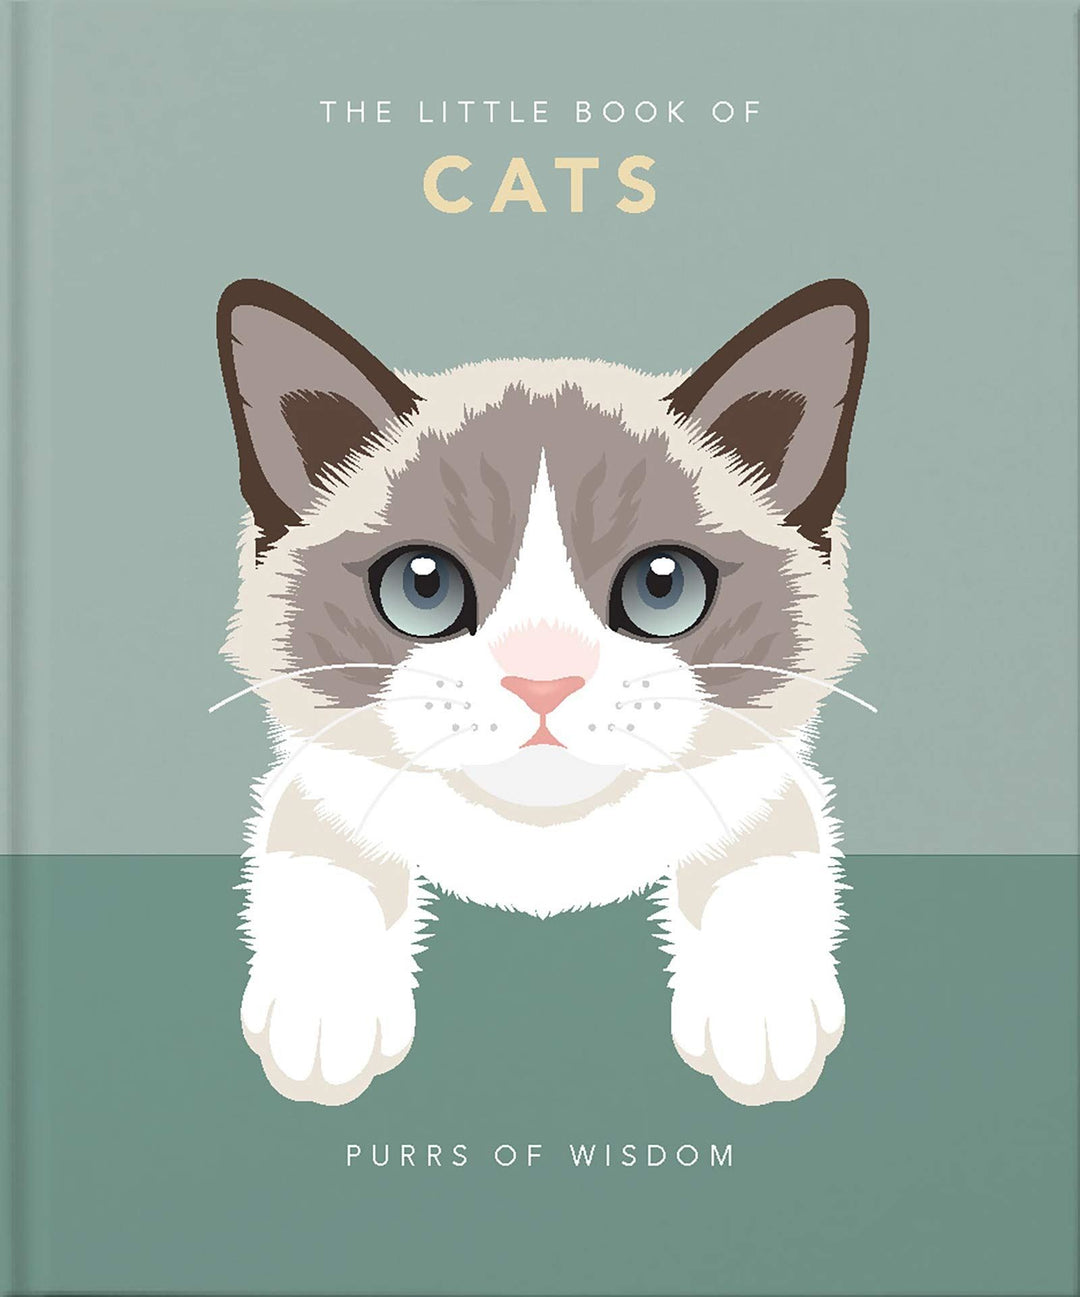 A LITTLE BOOK OF CATS